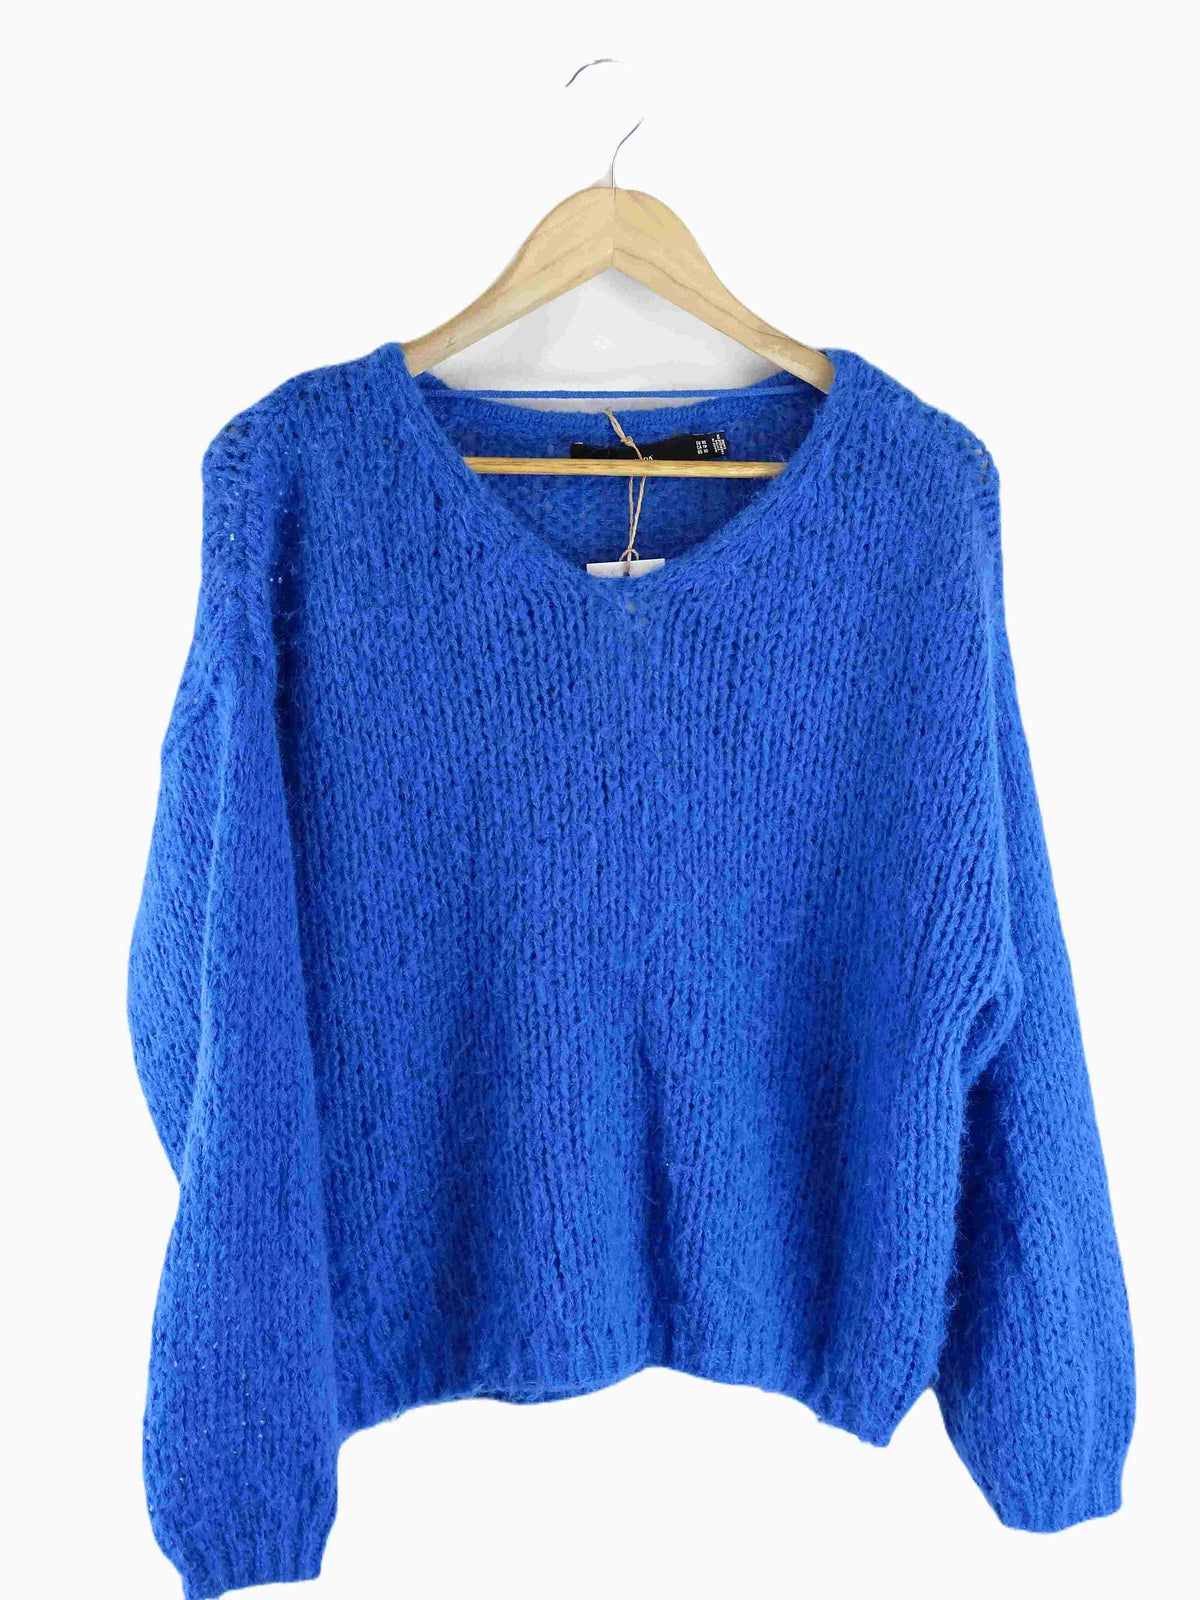 Vero Moda Blue Knit Jumper XS